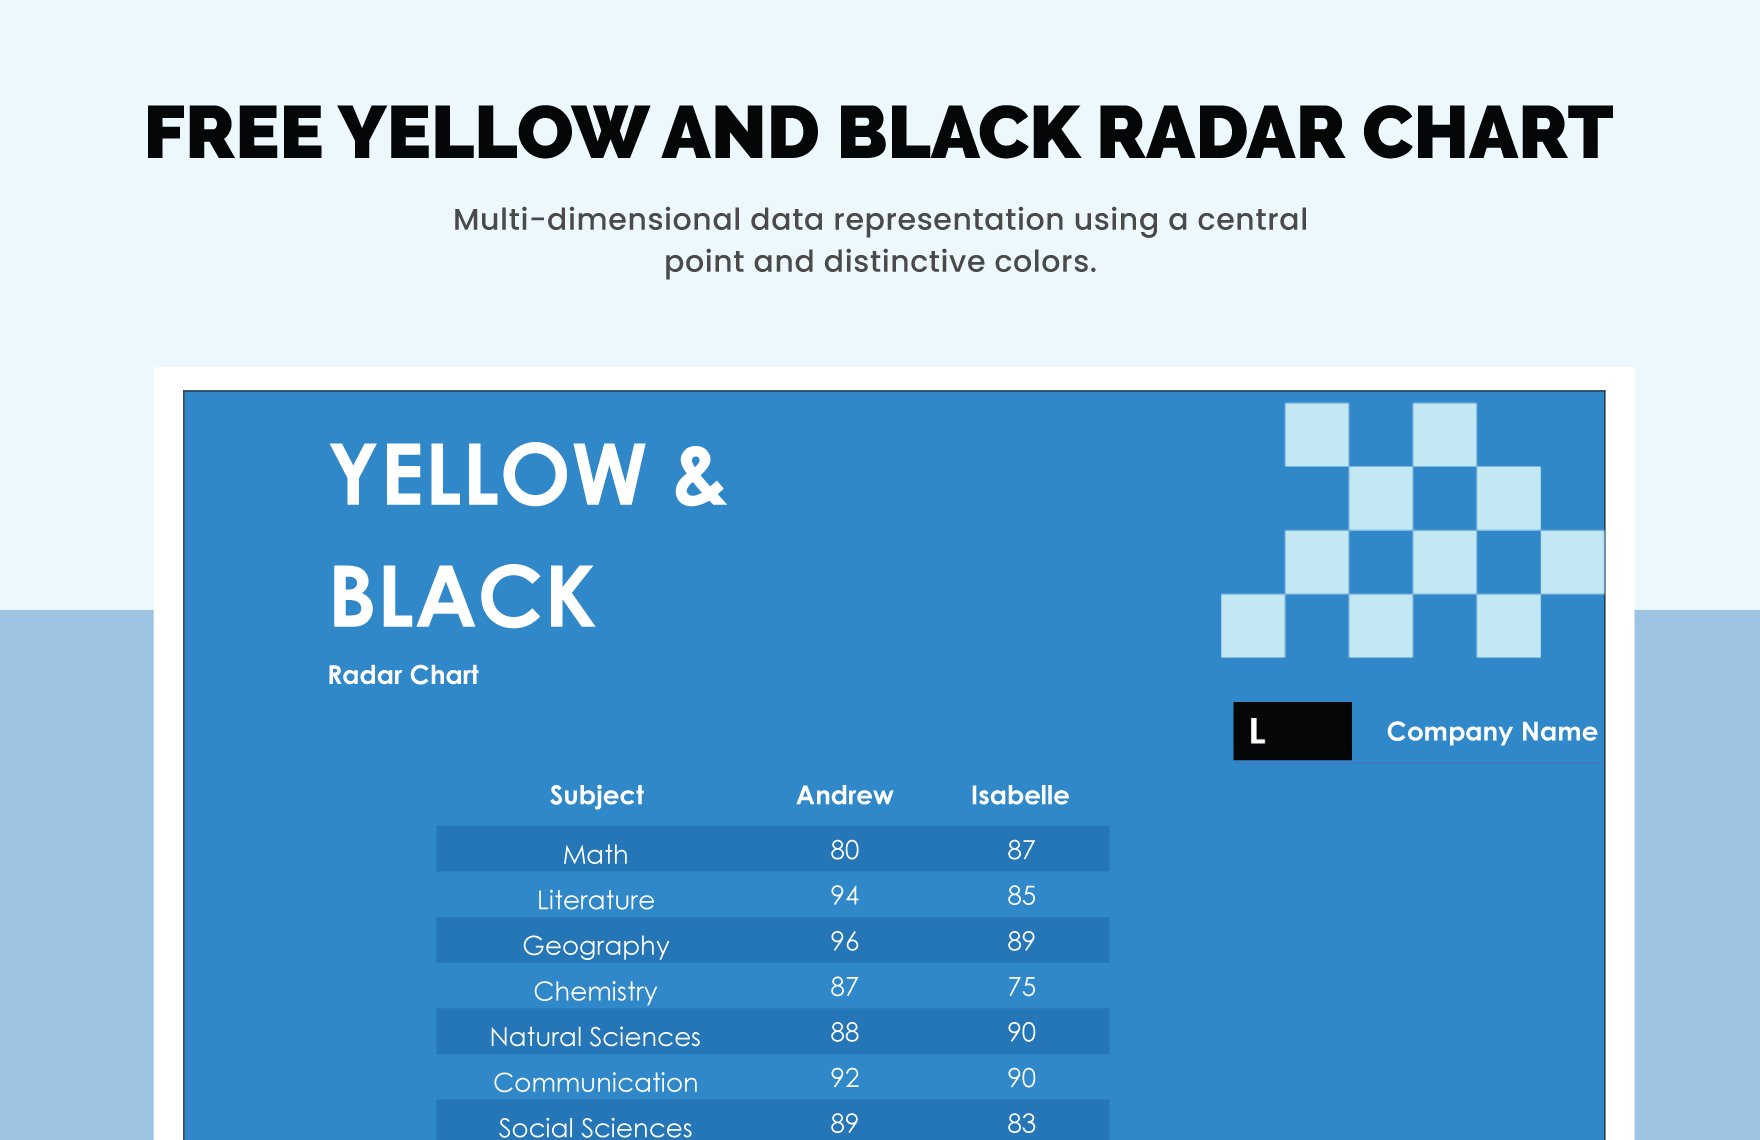 Free Yellow and Black Radar Chart